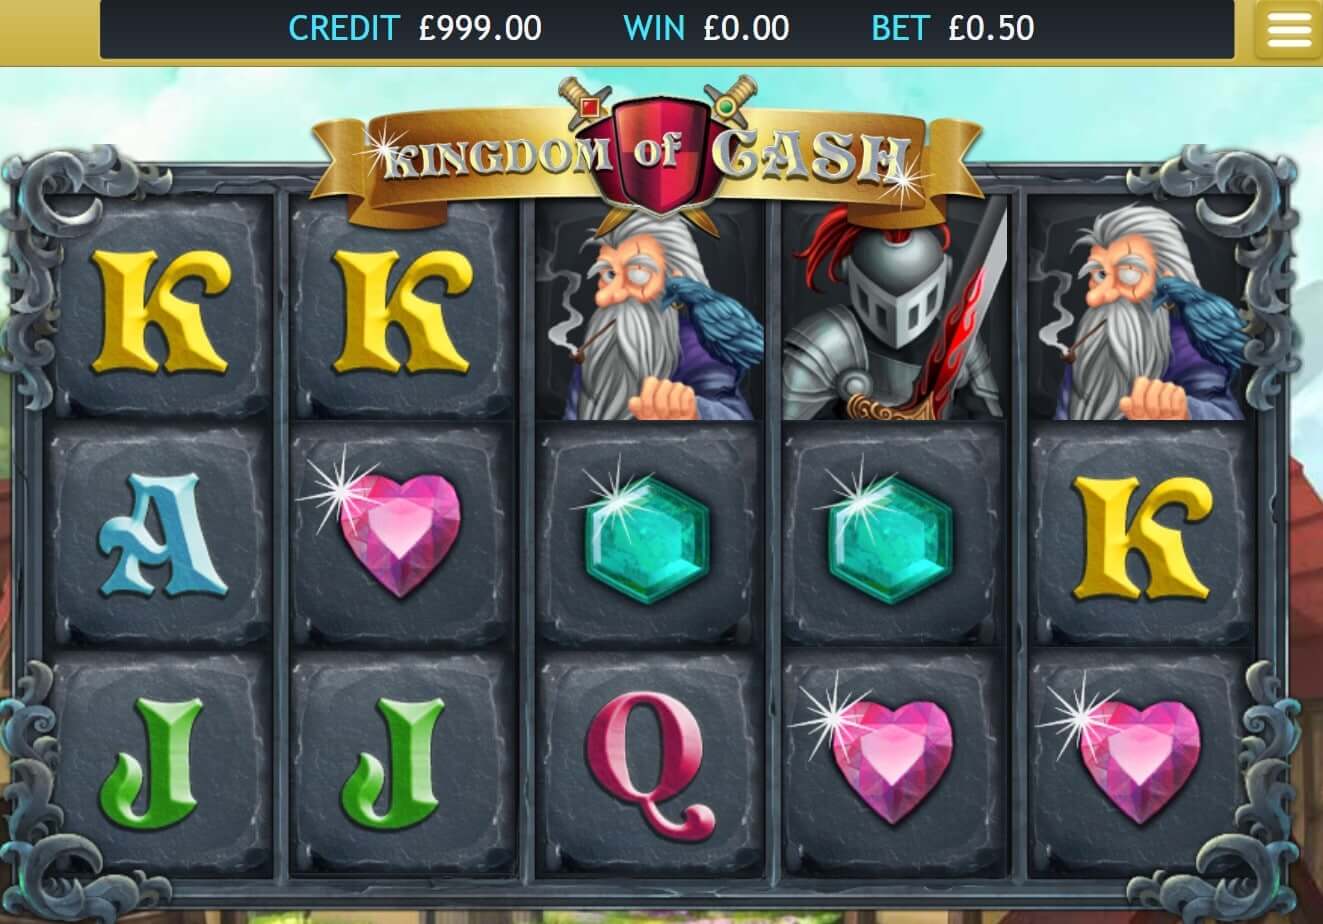 Kingdom of Cash Free Spins